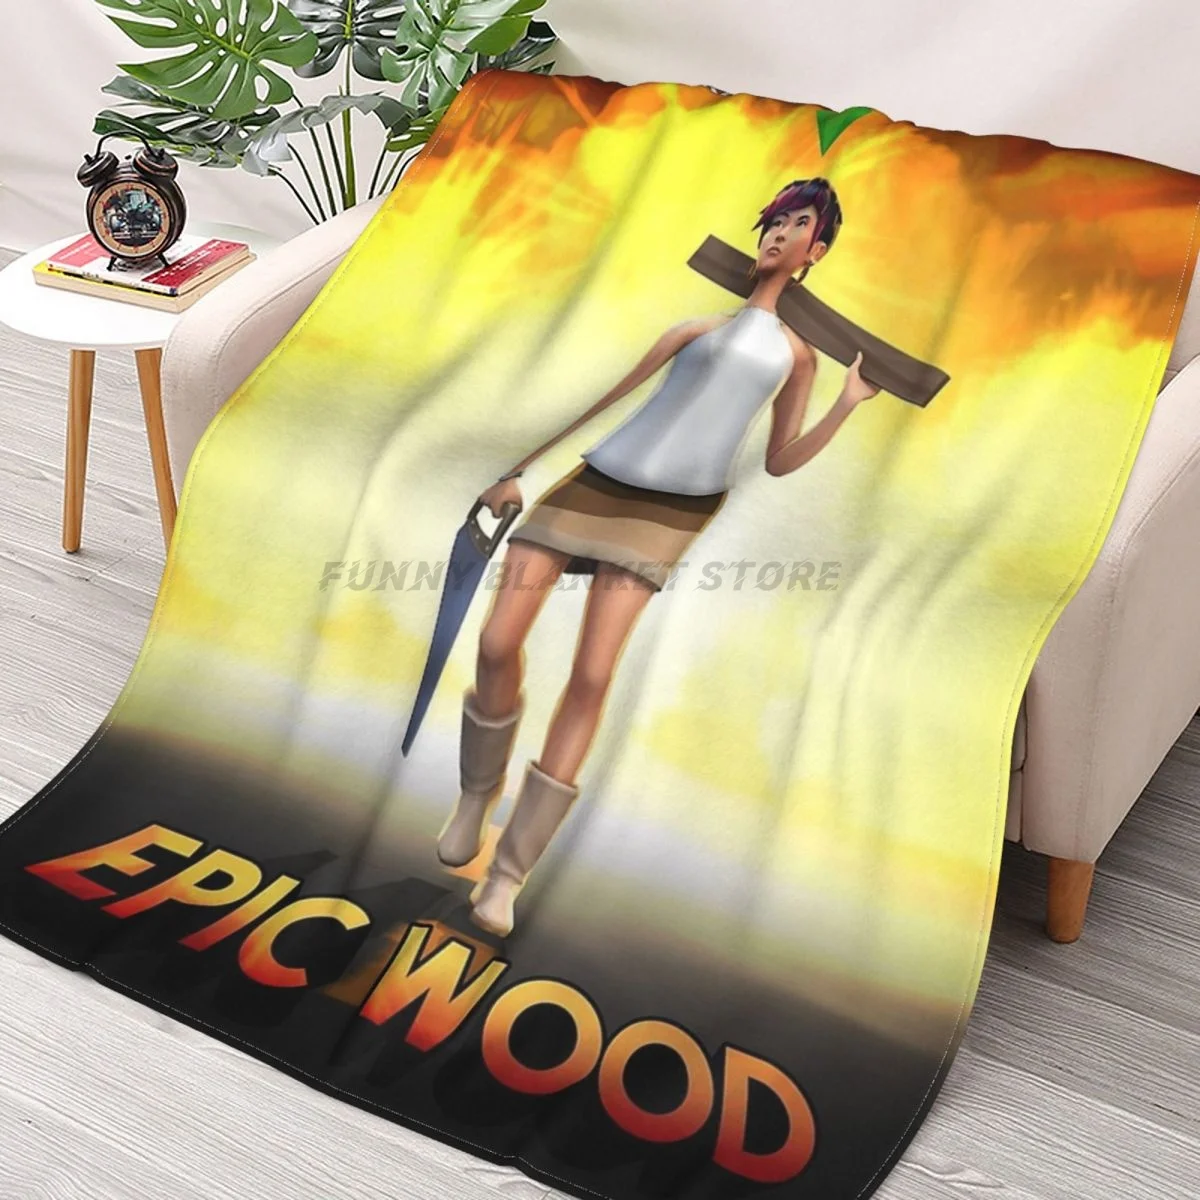 

Фланелевое ультра-мягкое теплое одеяло для пикника с коллажем из фильма Epic Wood The Sims 4 Plumbob Basegame